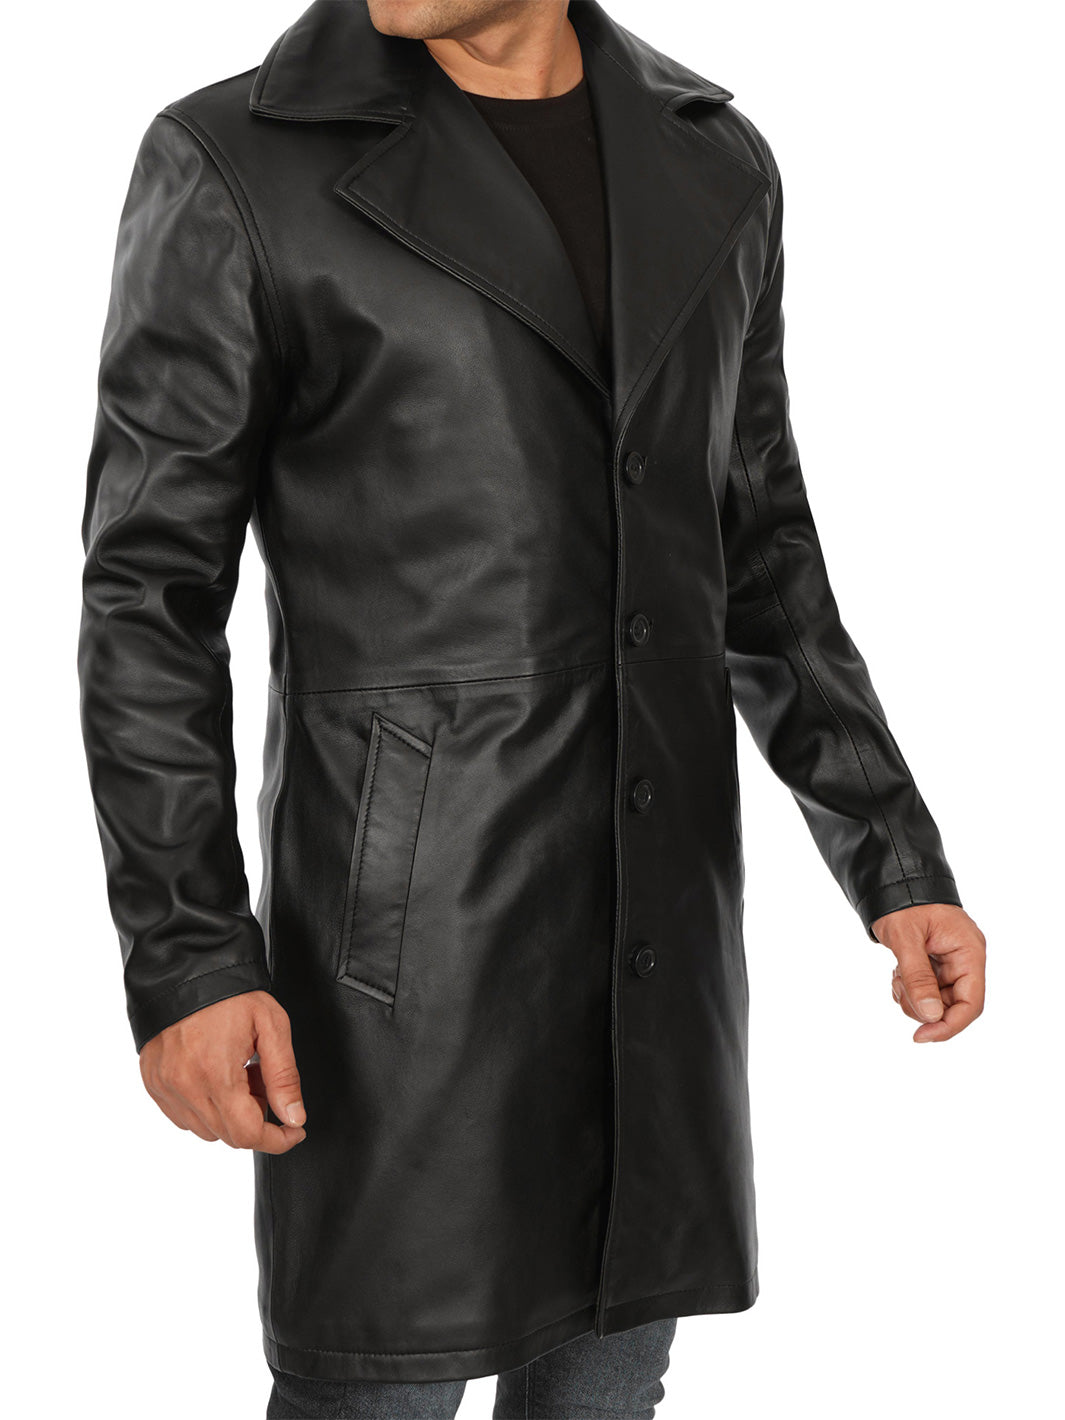 Jackson Men's Black 3/4 Length Leather Car Coat